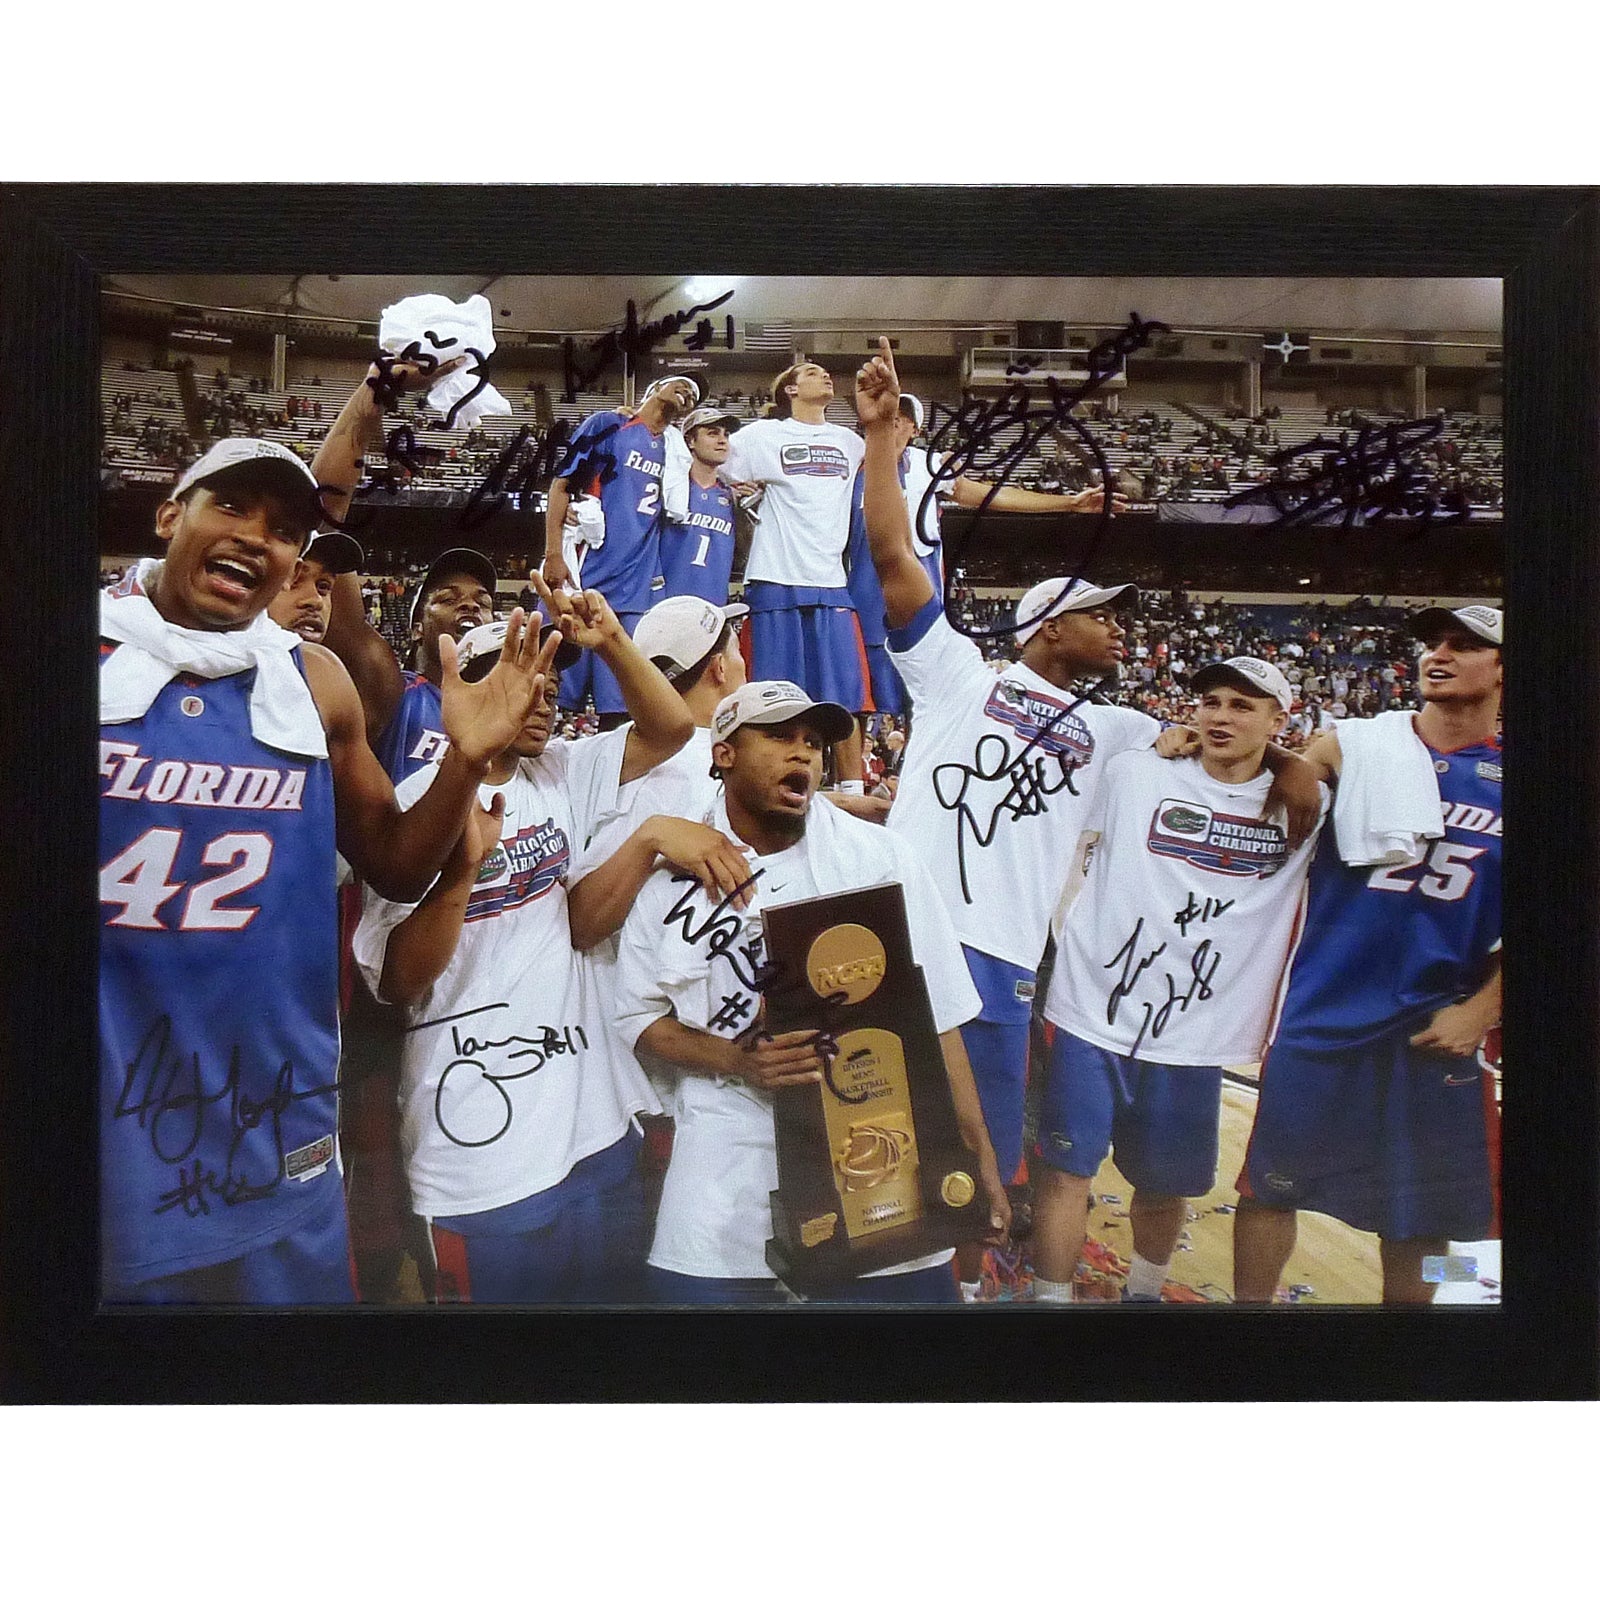 2005-06 Florida Gators Team Autographed (06 Final Four Celebration Hodge Trophy) Framed 16x20 Photo